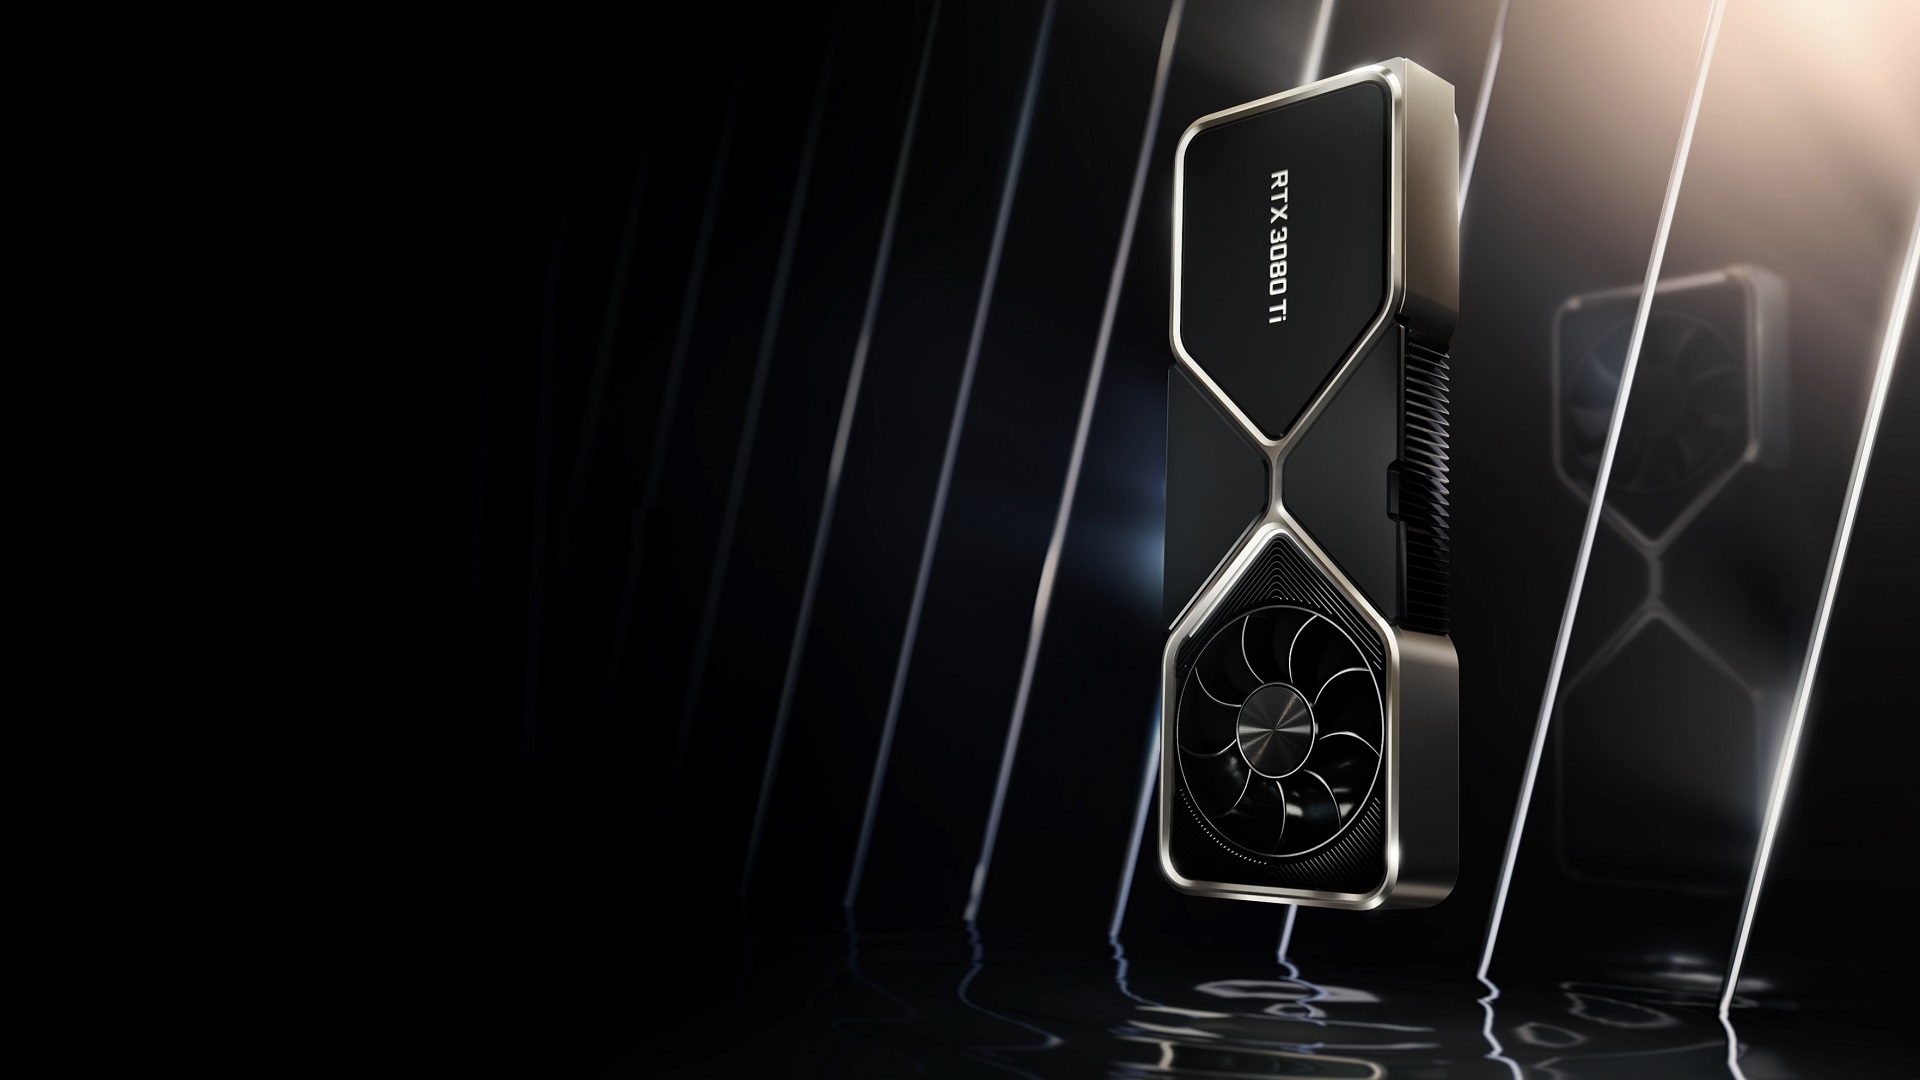 NVIDIA GeForce RTX 3080 Ti and 3070 Ti GPUs Announced